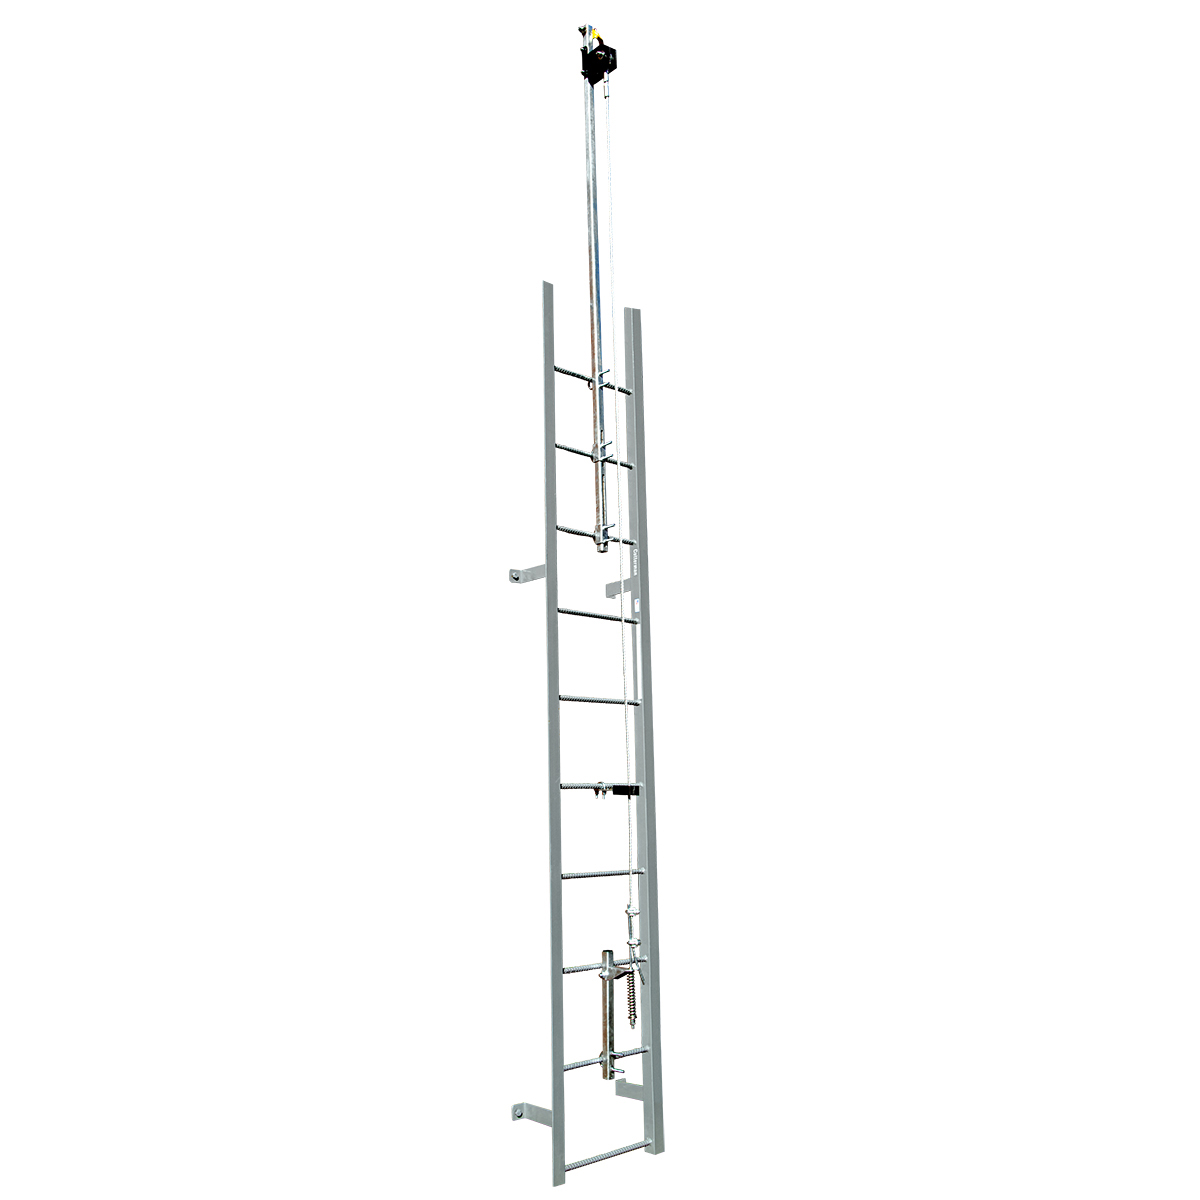 SafeWaze 50' VLL Cable Ladder System w/Extended Top Bracket, 2-person Complete Kit